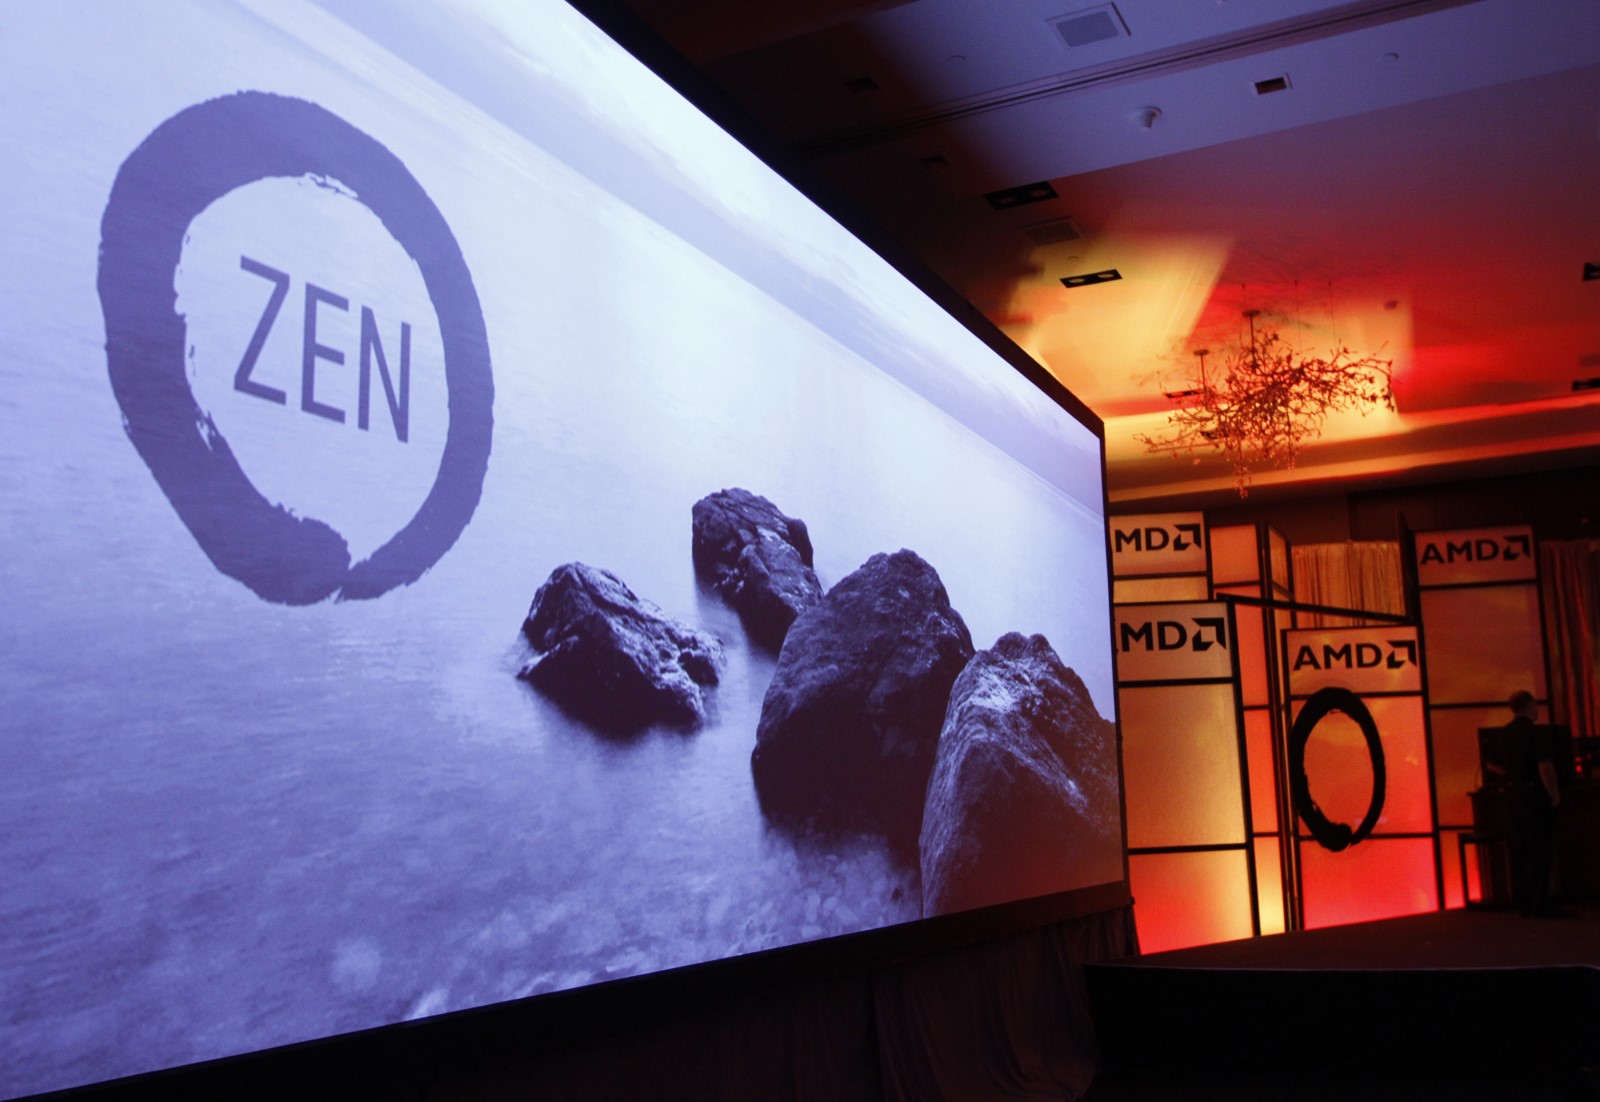 "We are back" λέει η AMD με τους επεξεργαστές ZEN που τους βάζει απέναντι από Broadwell-E